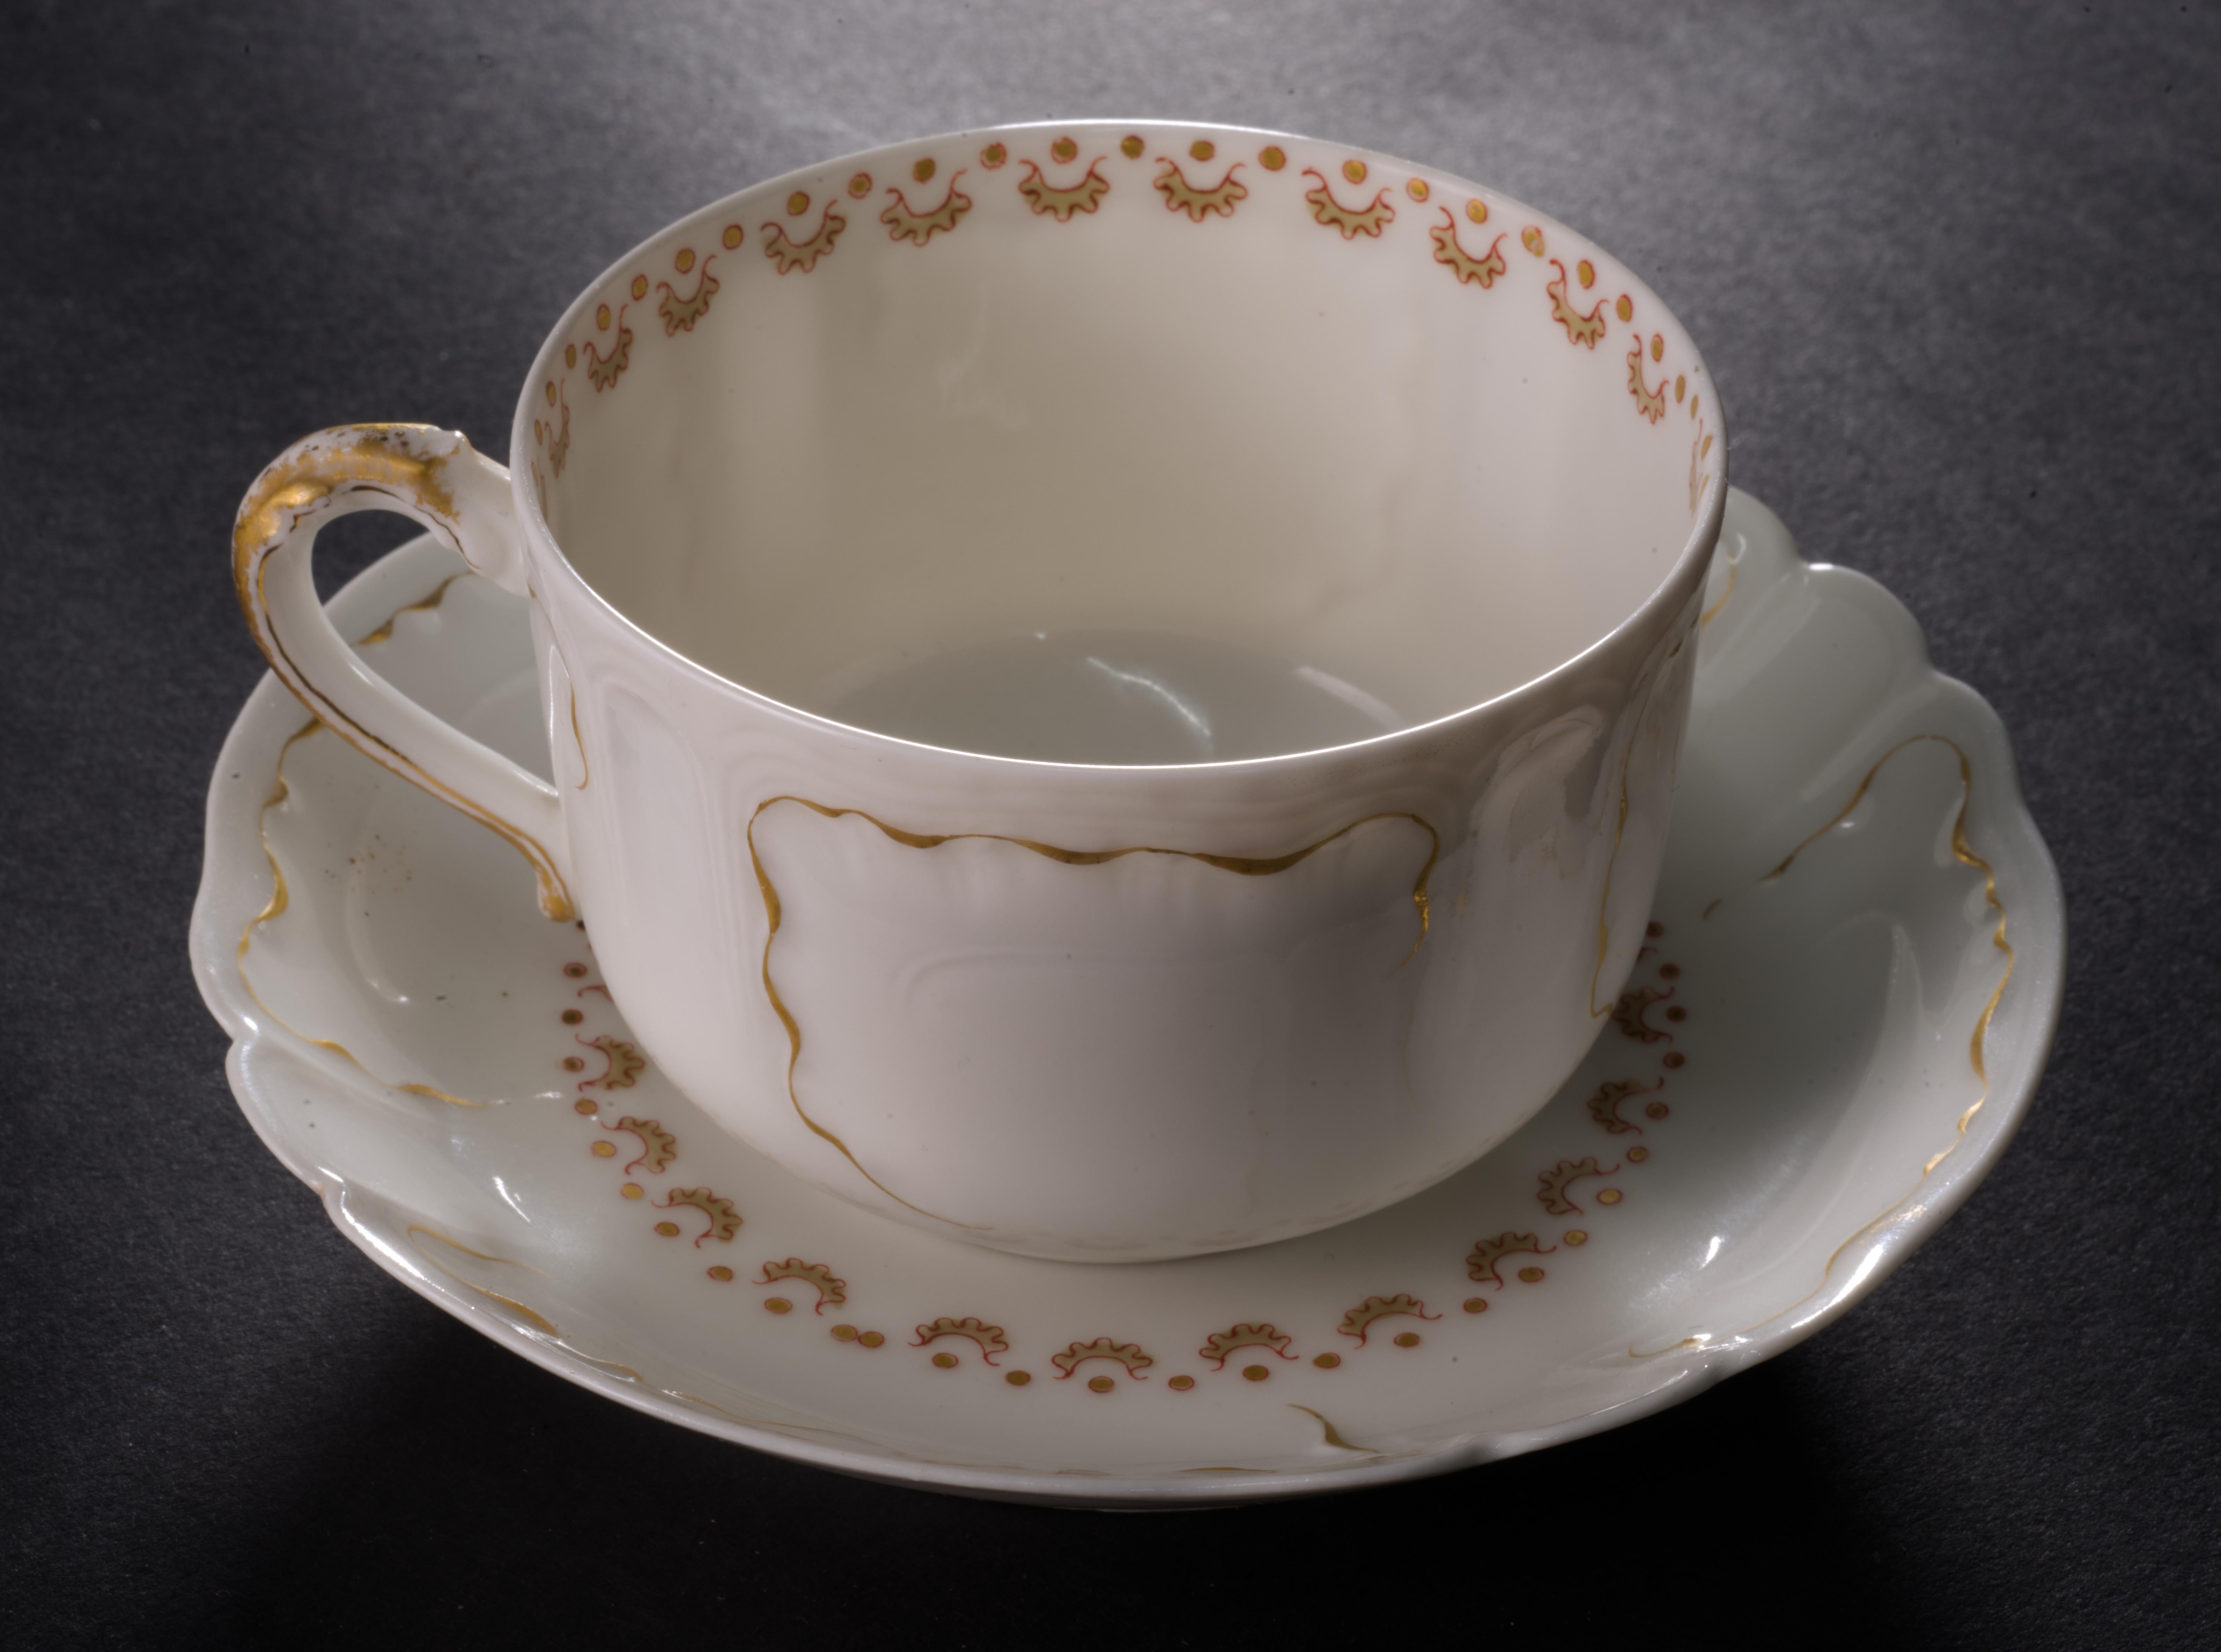 French Rare Haviland Limoges Cup and Saucer Set Antique Porcelain, France 1890s For Sale